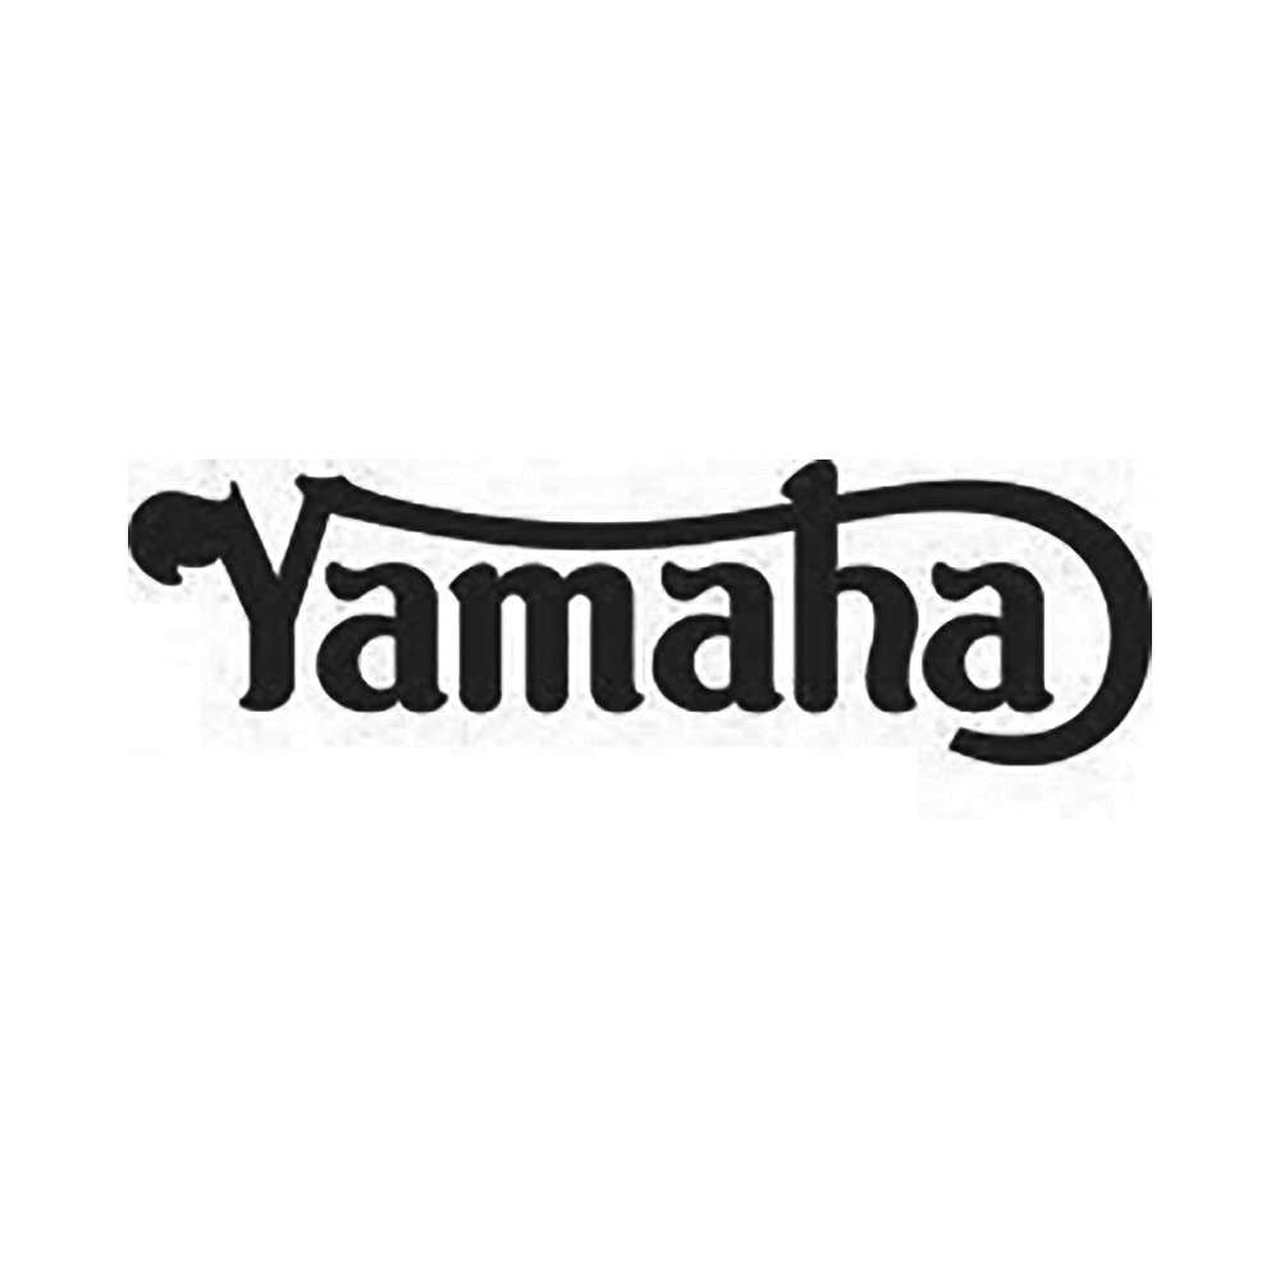 Yammah Logo - Yamaha Logo Vinyl Decal Graphic